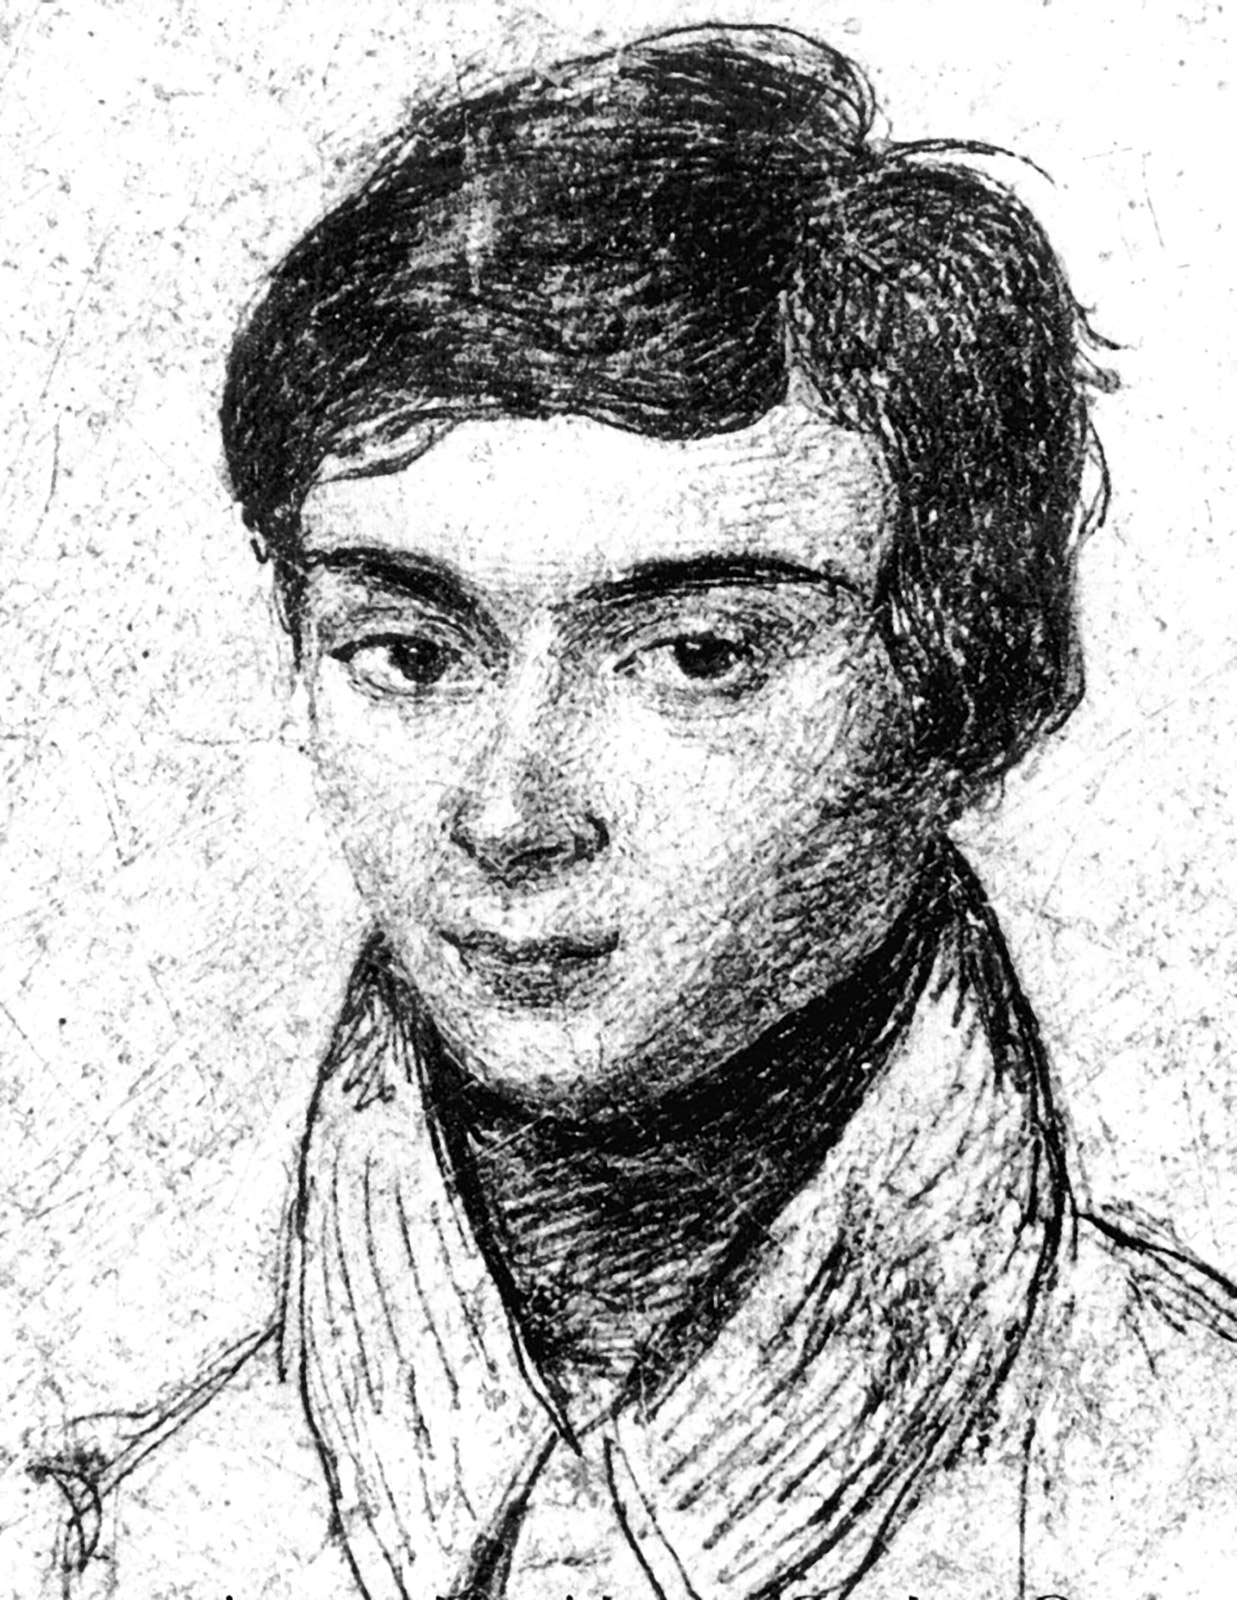 Retrato anónimo de Évariste Galois, *ca*. 1826 